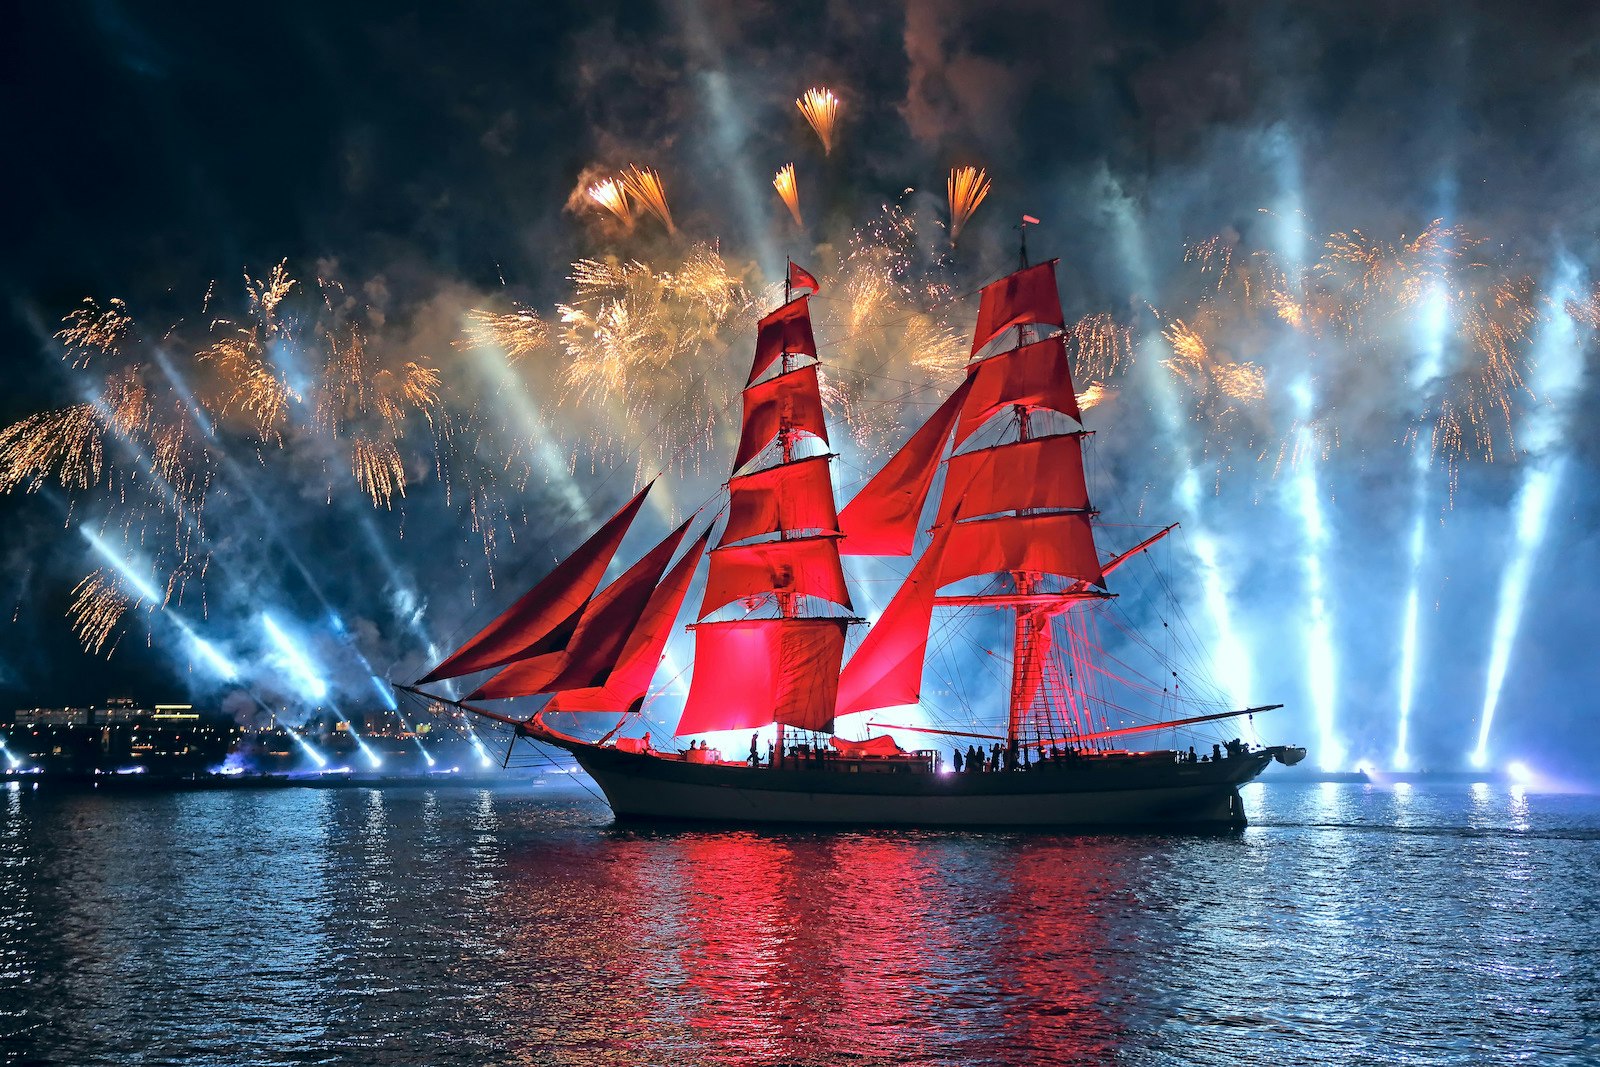 Celebration Scarlet Sails show under White Nights Festival, 21 juni 2015, St. Petersburg, Ryssland.